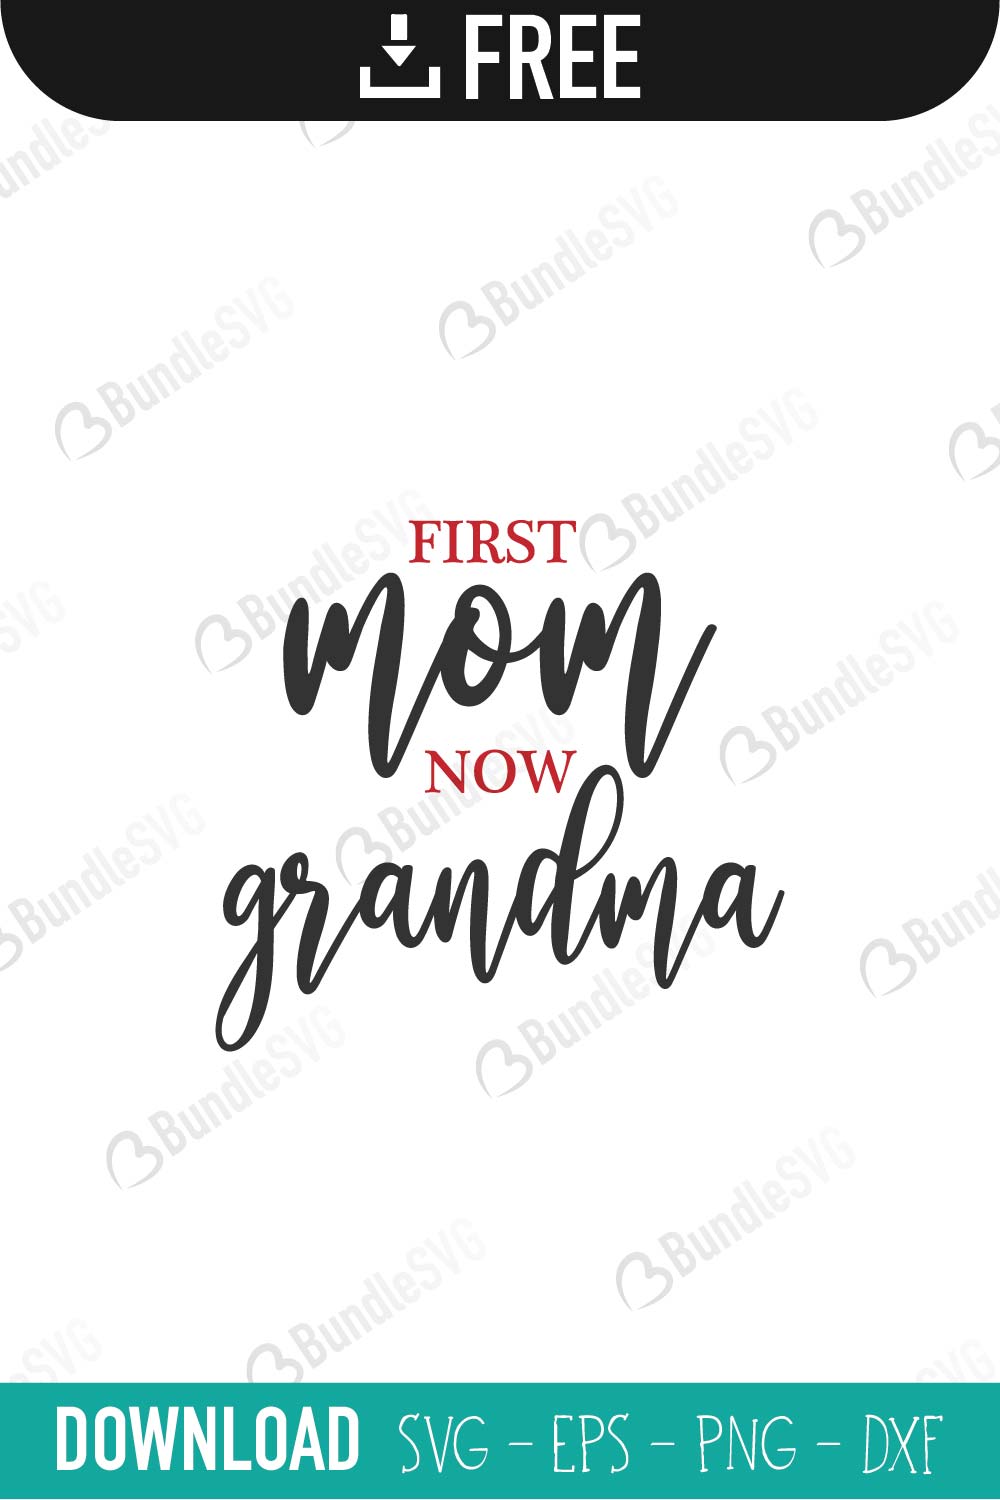 Download First Mom Now Grandma SVG Cut Files Free Download | BundleSVG